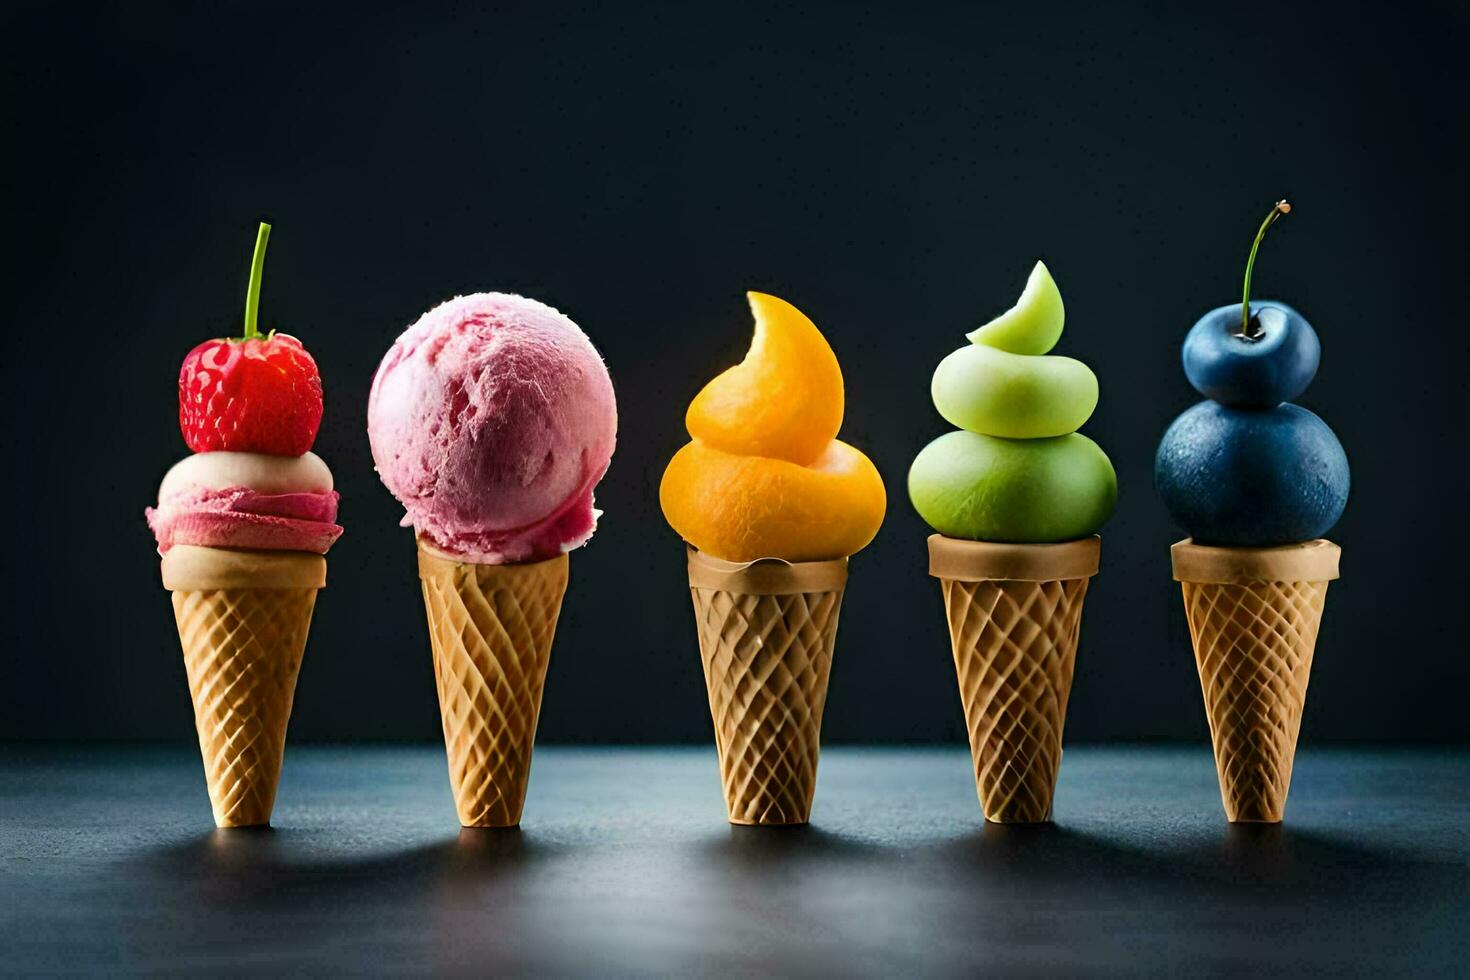 cinco gelo creme cones com diferente sabores. gerado por IA foto